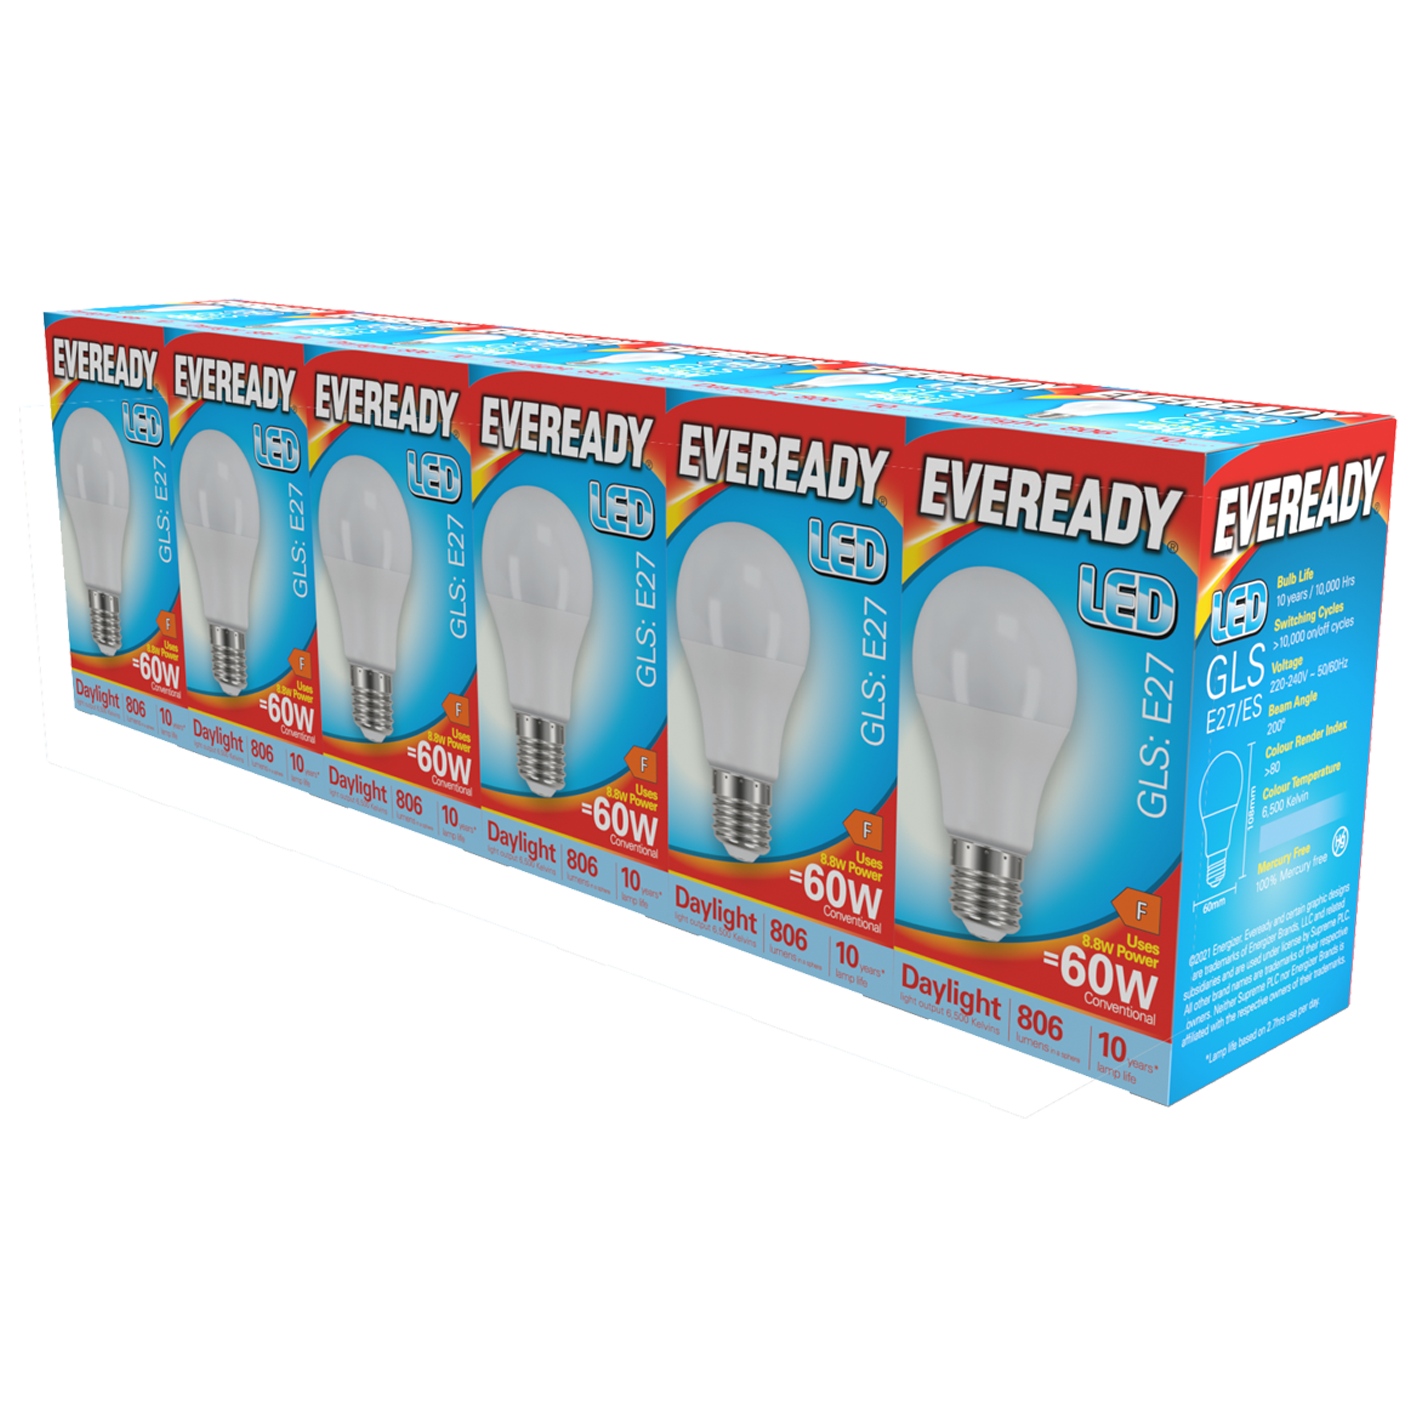 Eveready LED GLS E27 (ES) 806lm 8.8W 6500K (Daylight) Pack of 5+1